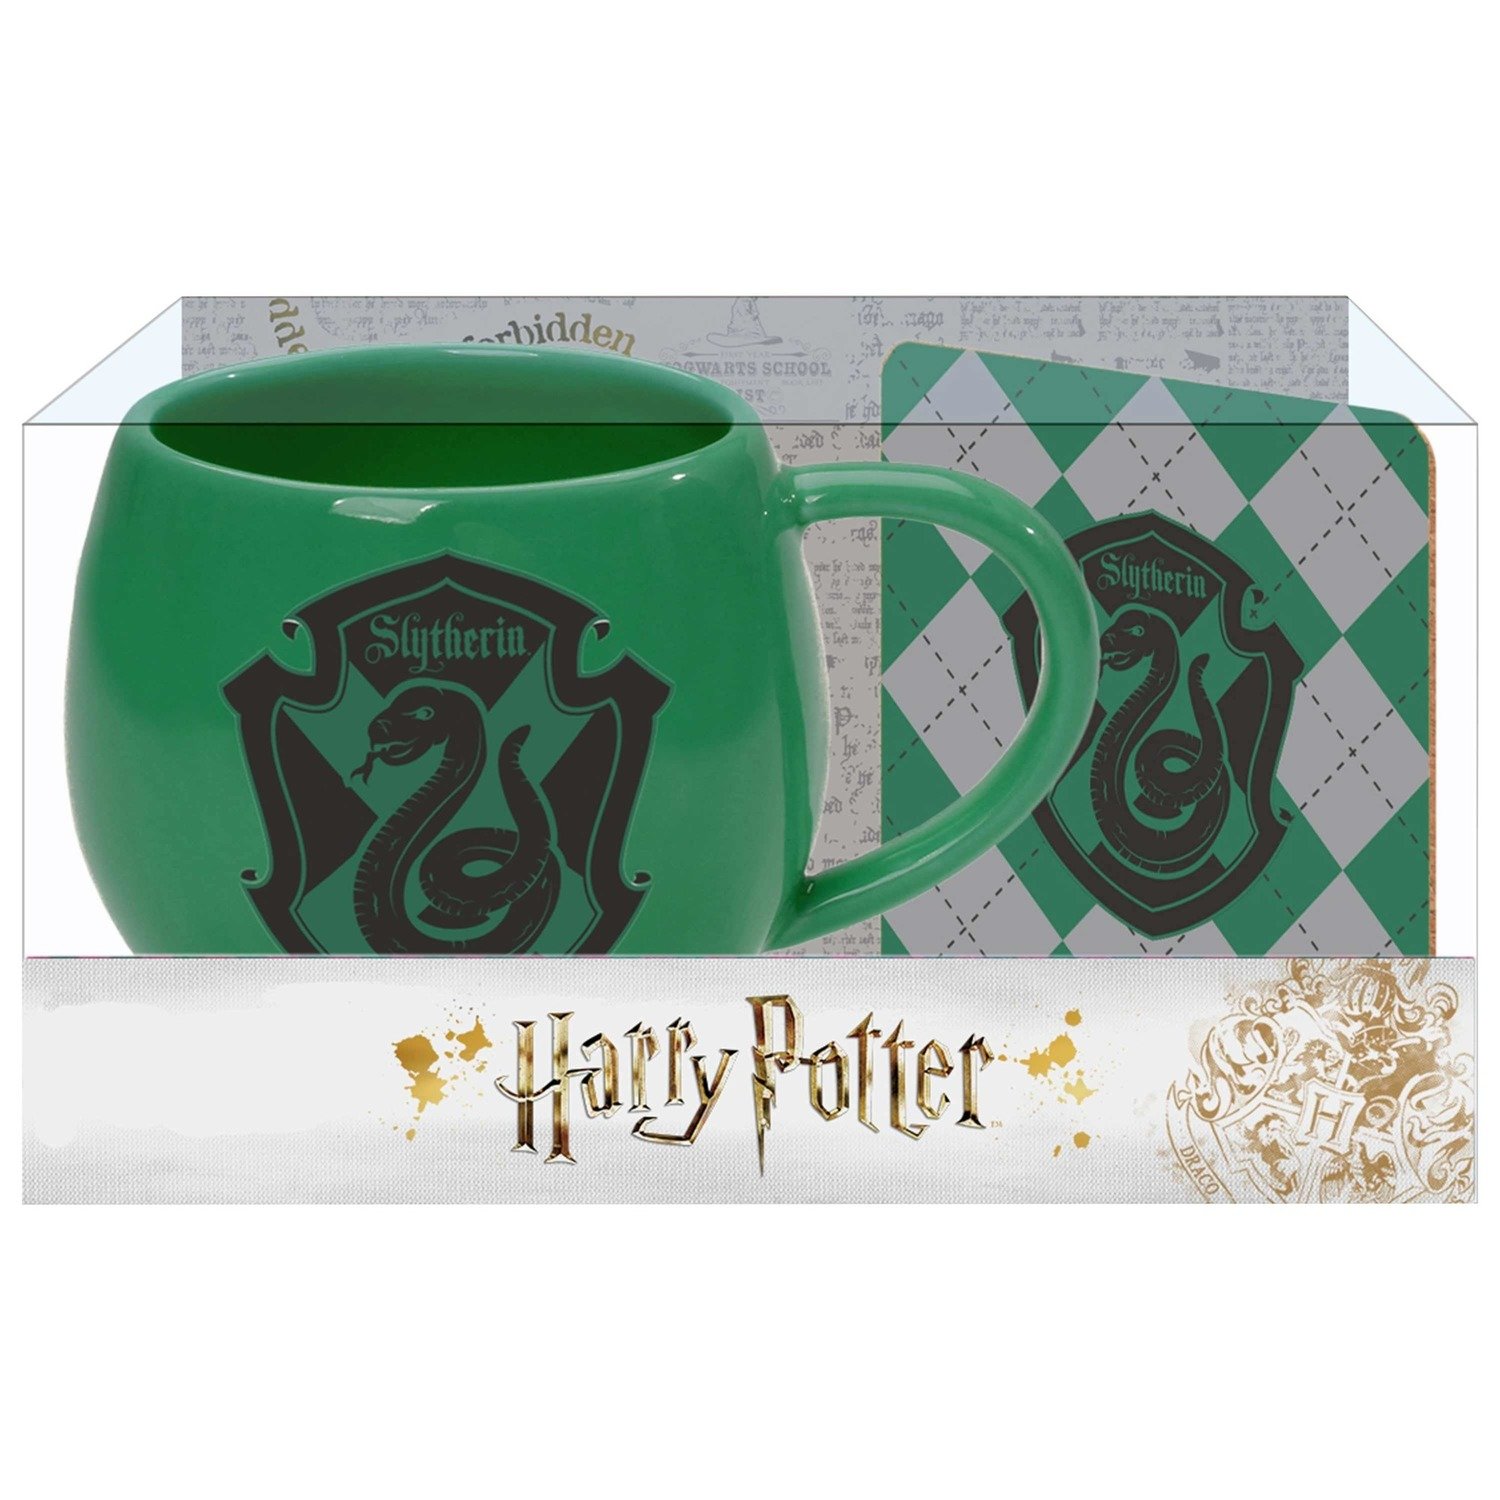 Enesco Ohapt mug with Coaster Green Slytherin